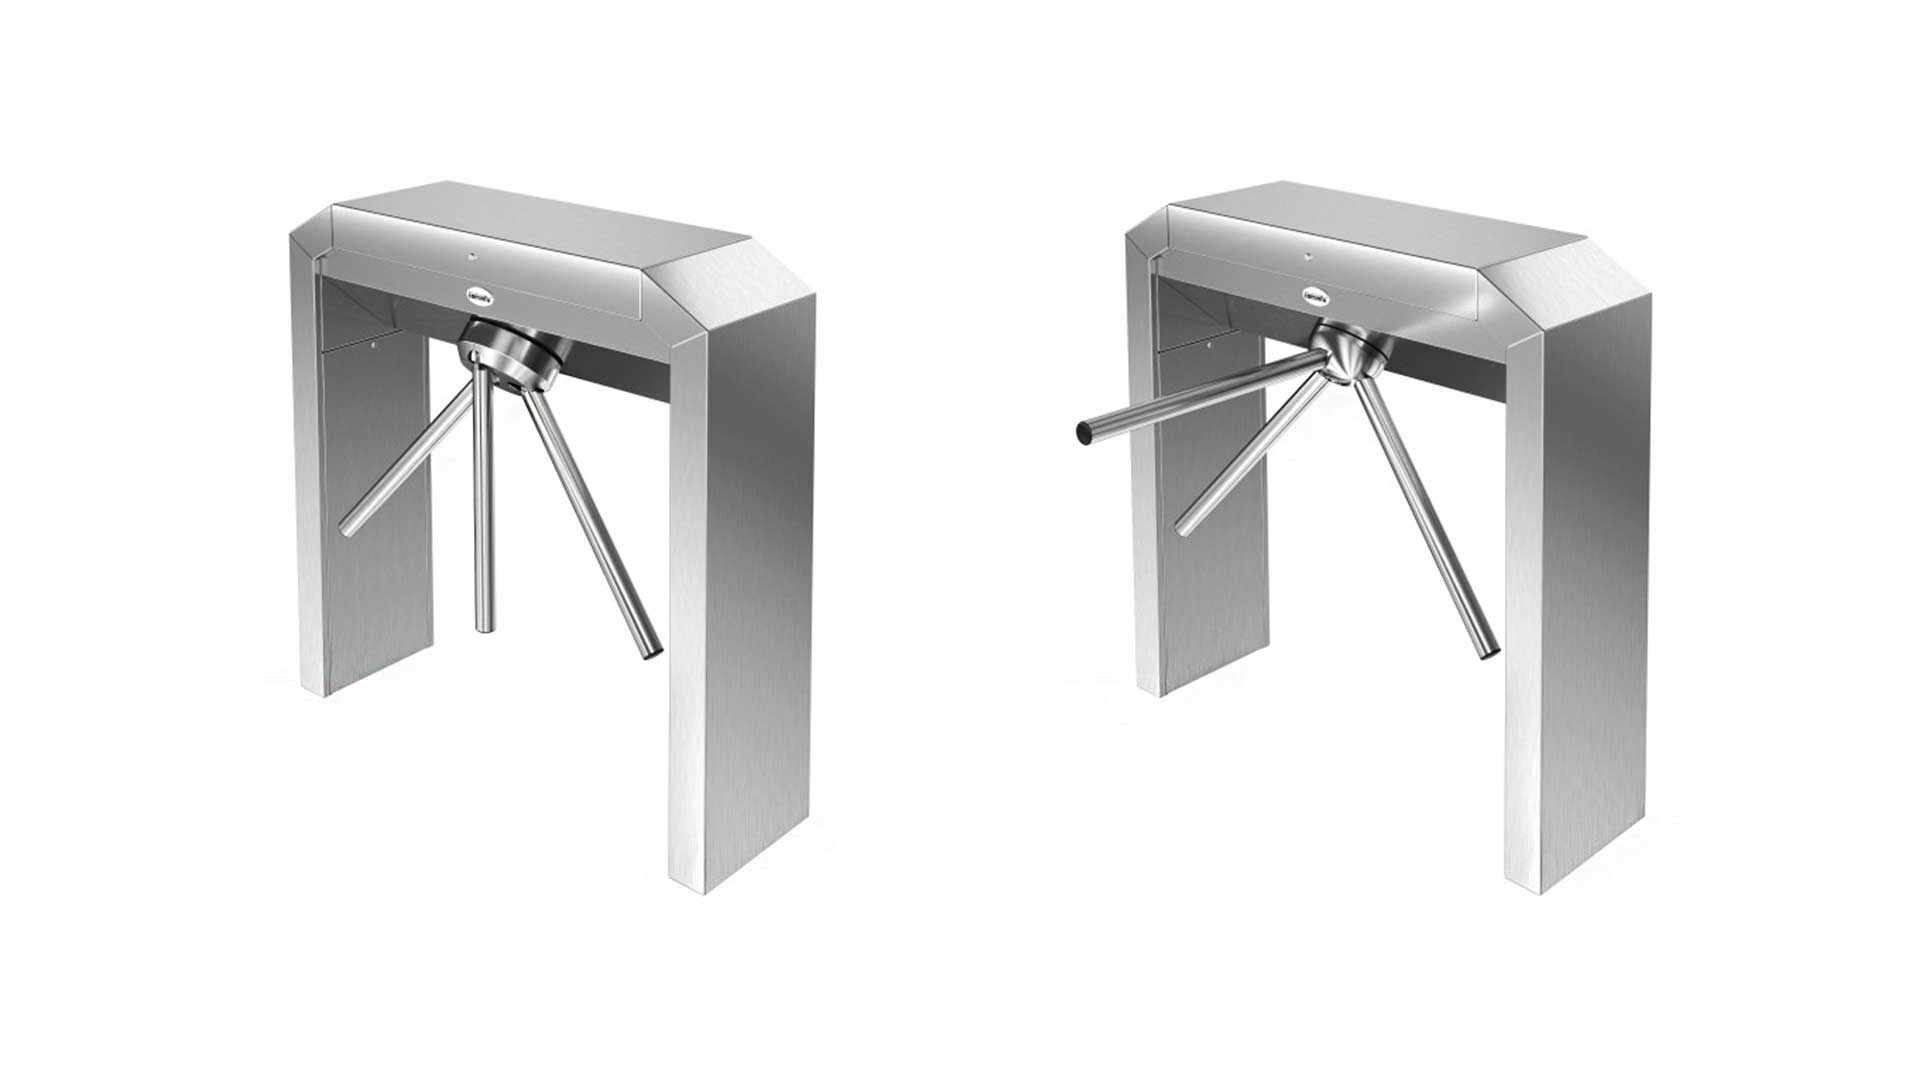 Cominfo bar ba three arm turnstile for access control